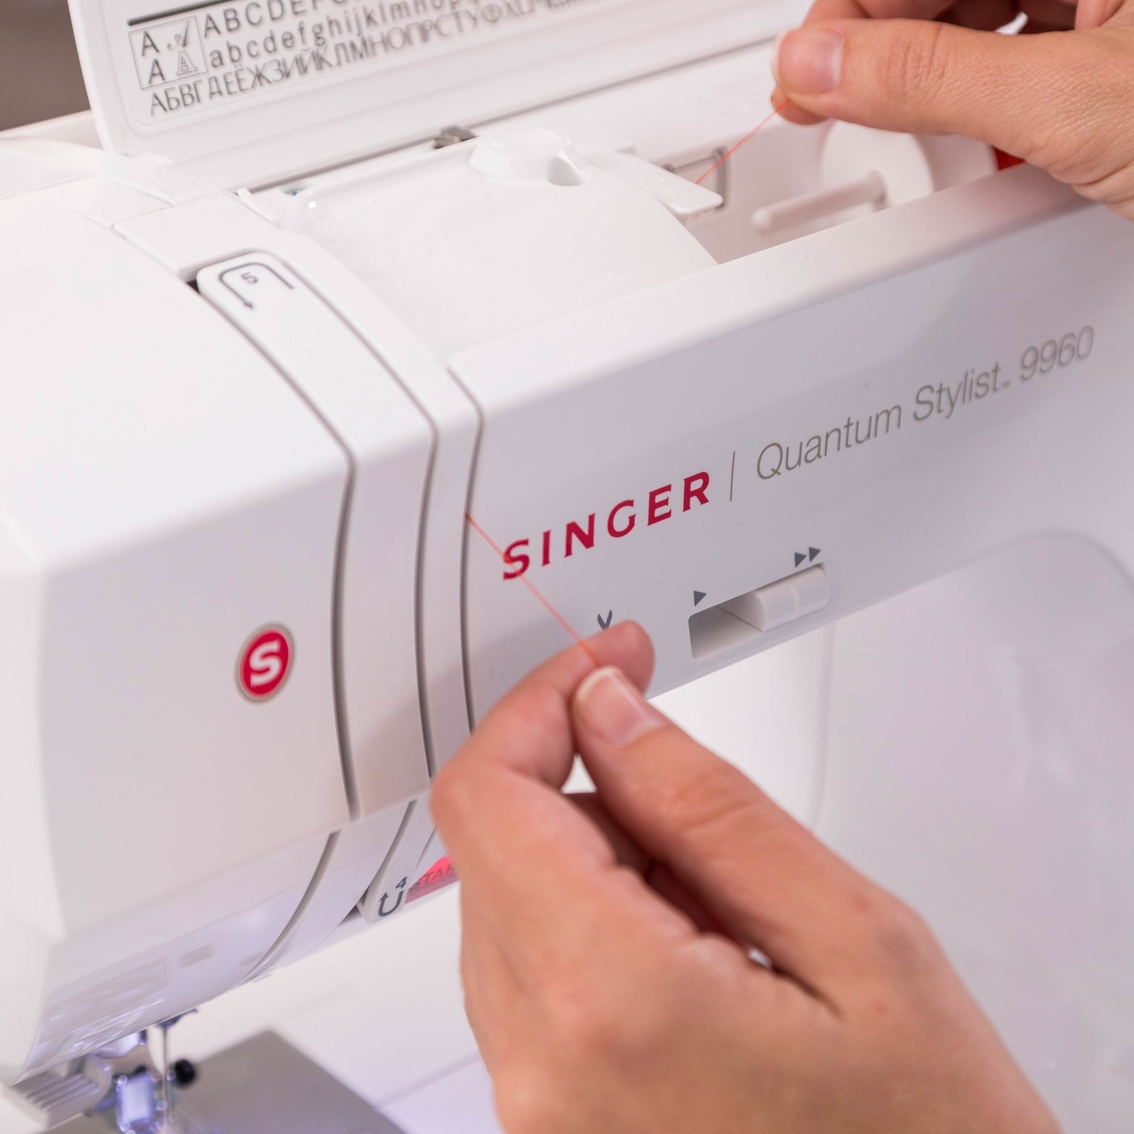 Singer Quantum Stylist 9960 Sewing Machine review by BirdyBooo